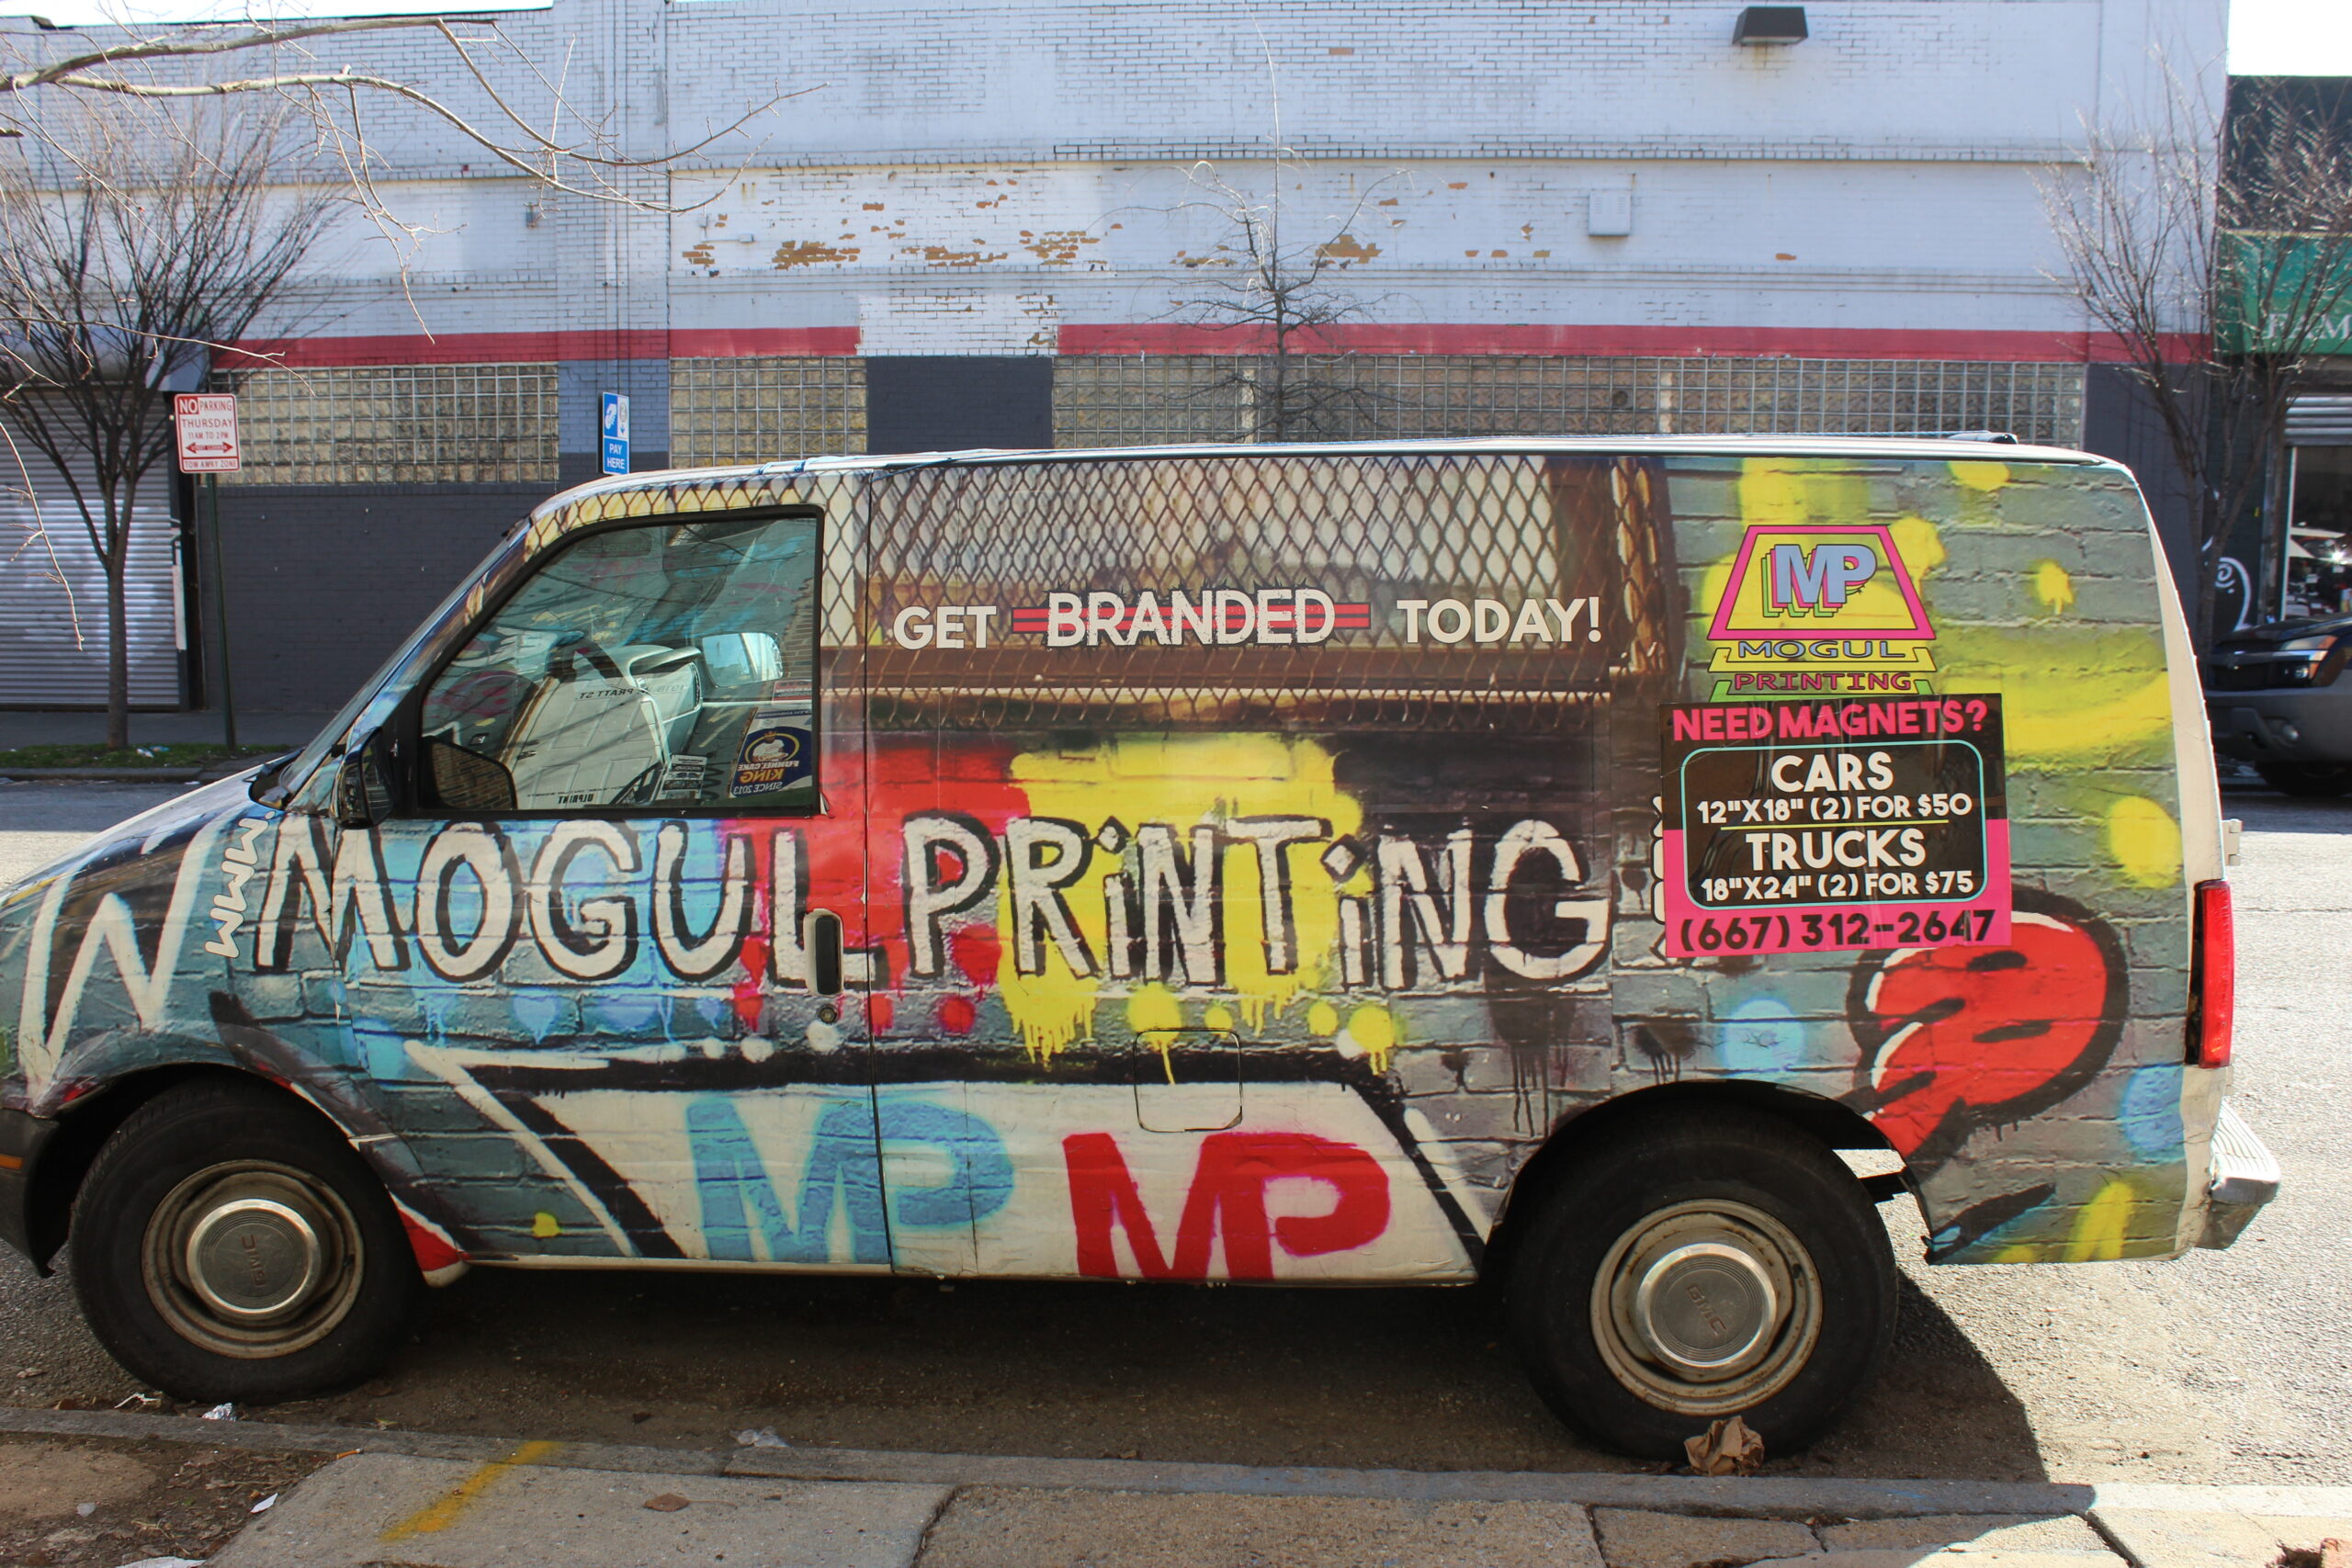 Van with graffiti and writing that says "Mogul Printing"